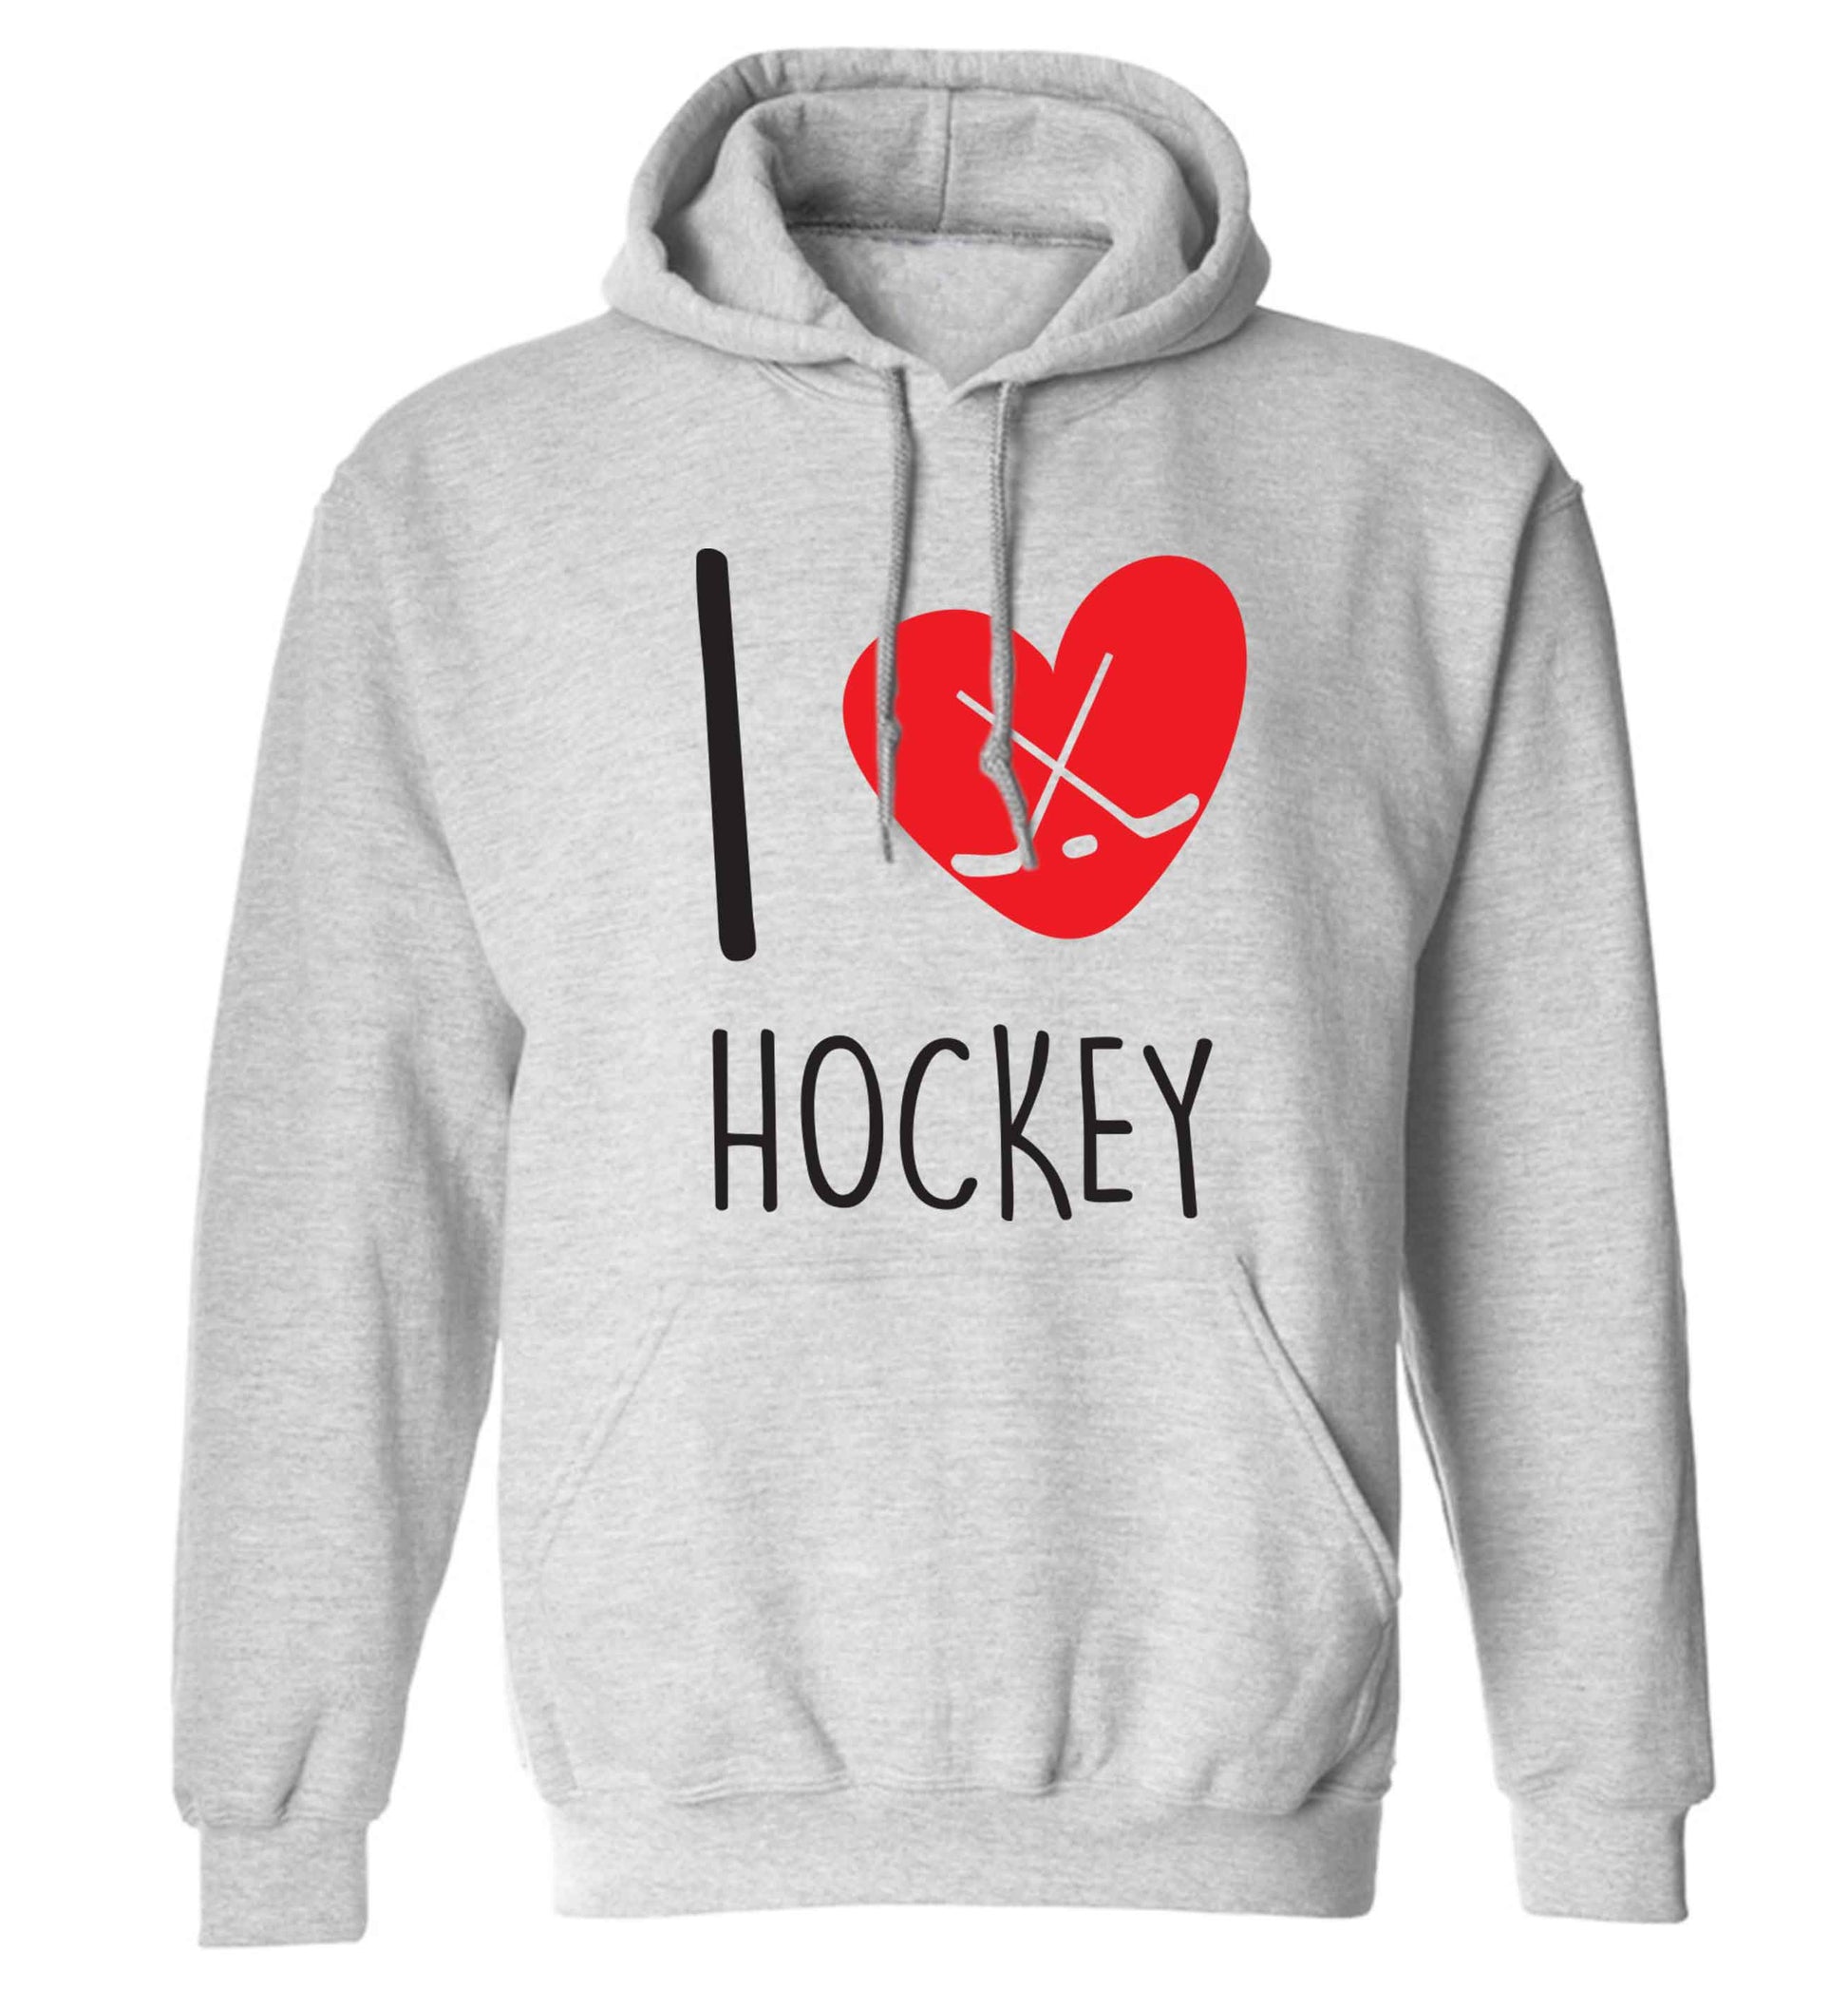 I love hockey adults unisex grey hoodie 2XL